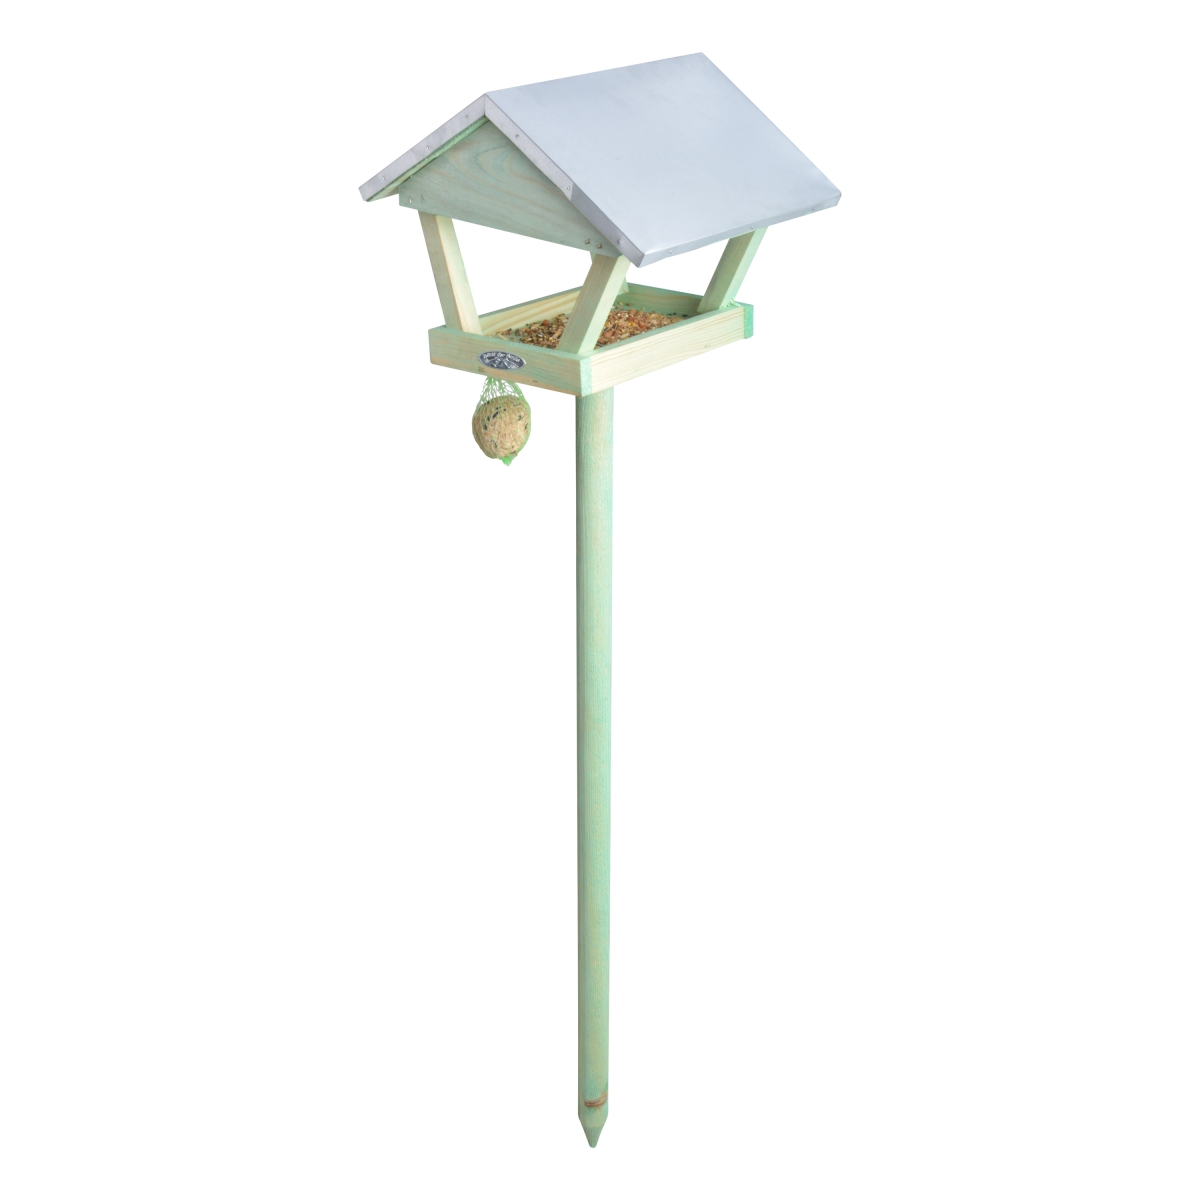 Picture of Esschert Design FB72 Bird Feeder with Galvanized Roof on Stake, Light Green - Wood